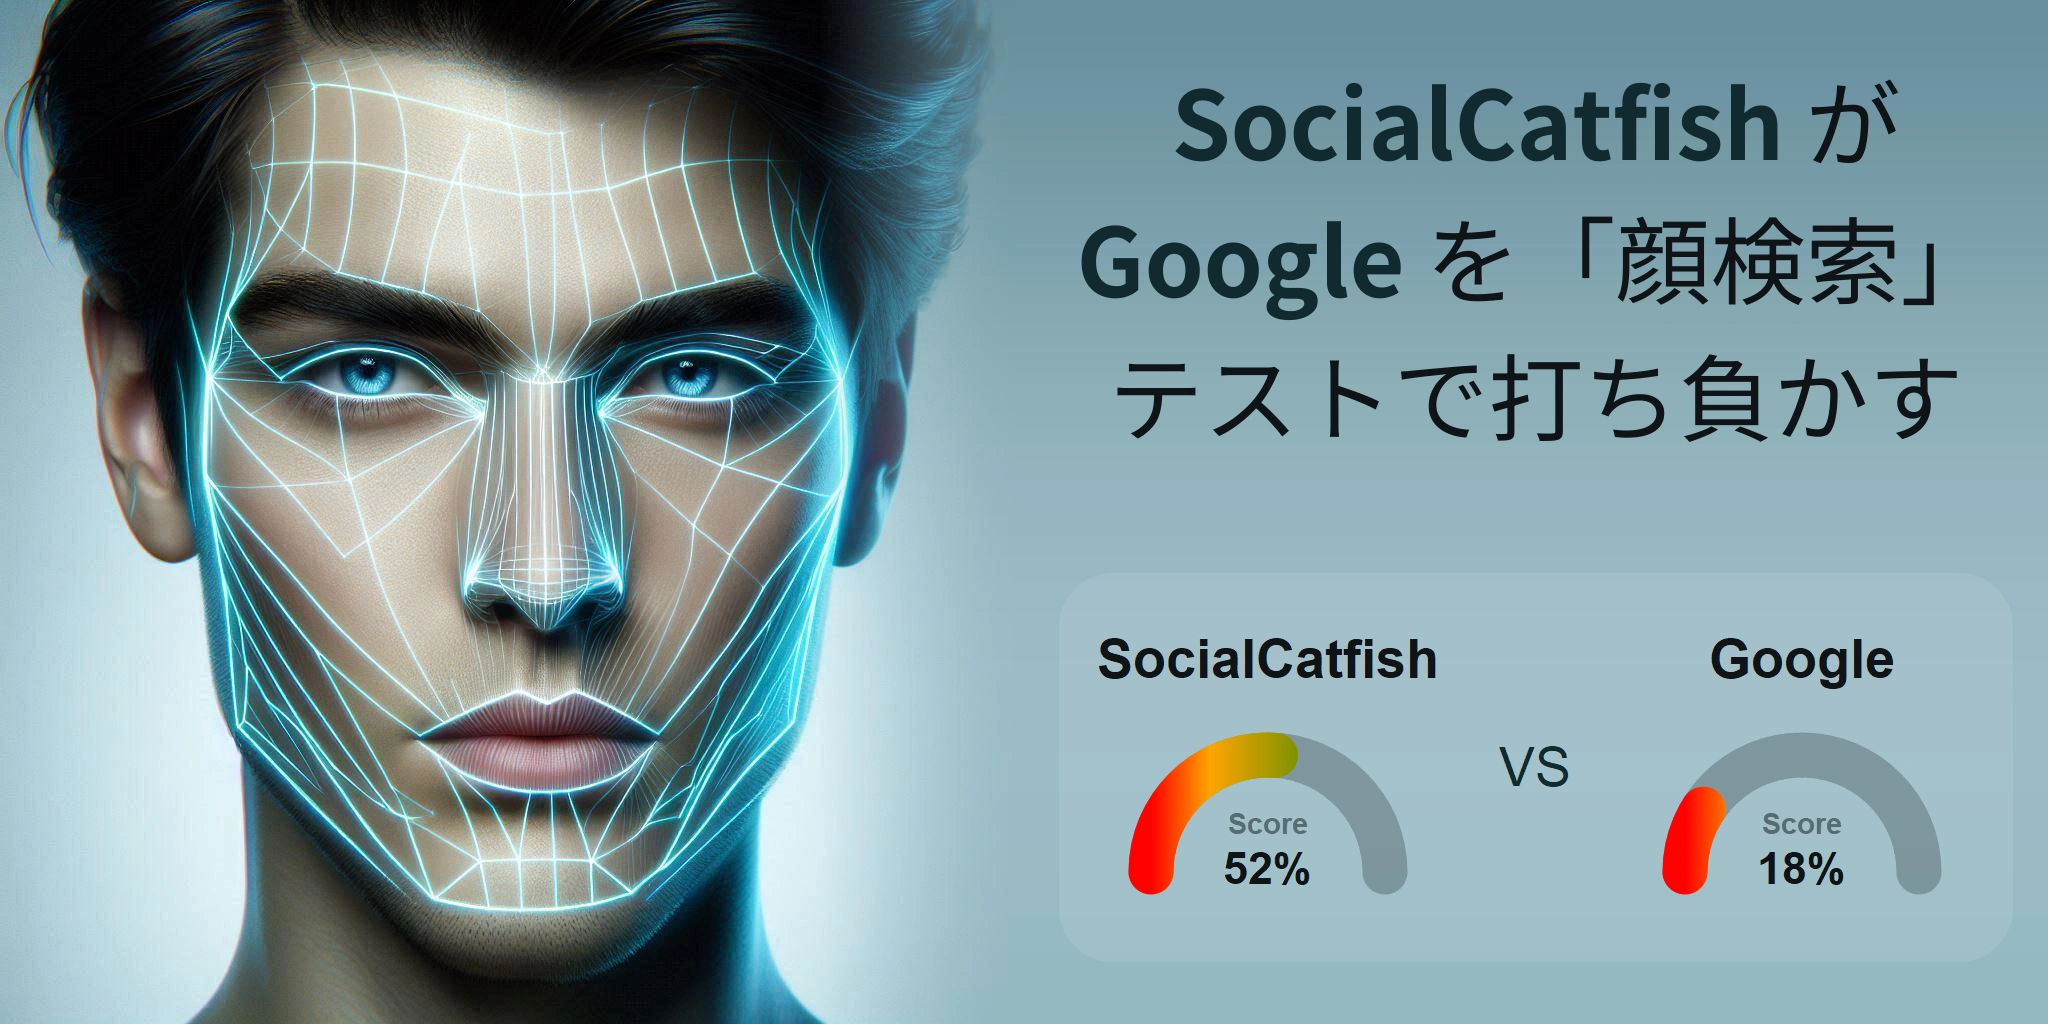 Google.com vs SocialCatfish.com